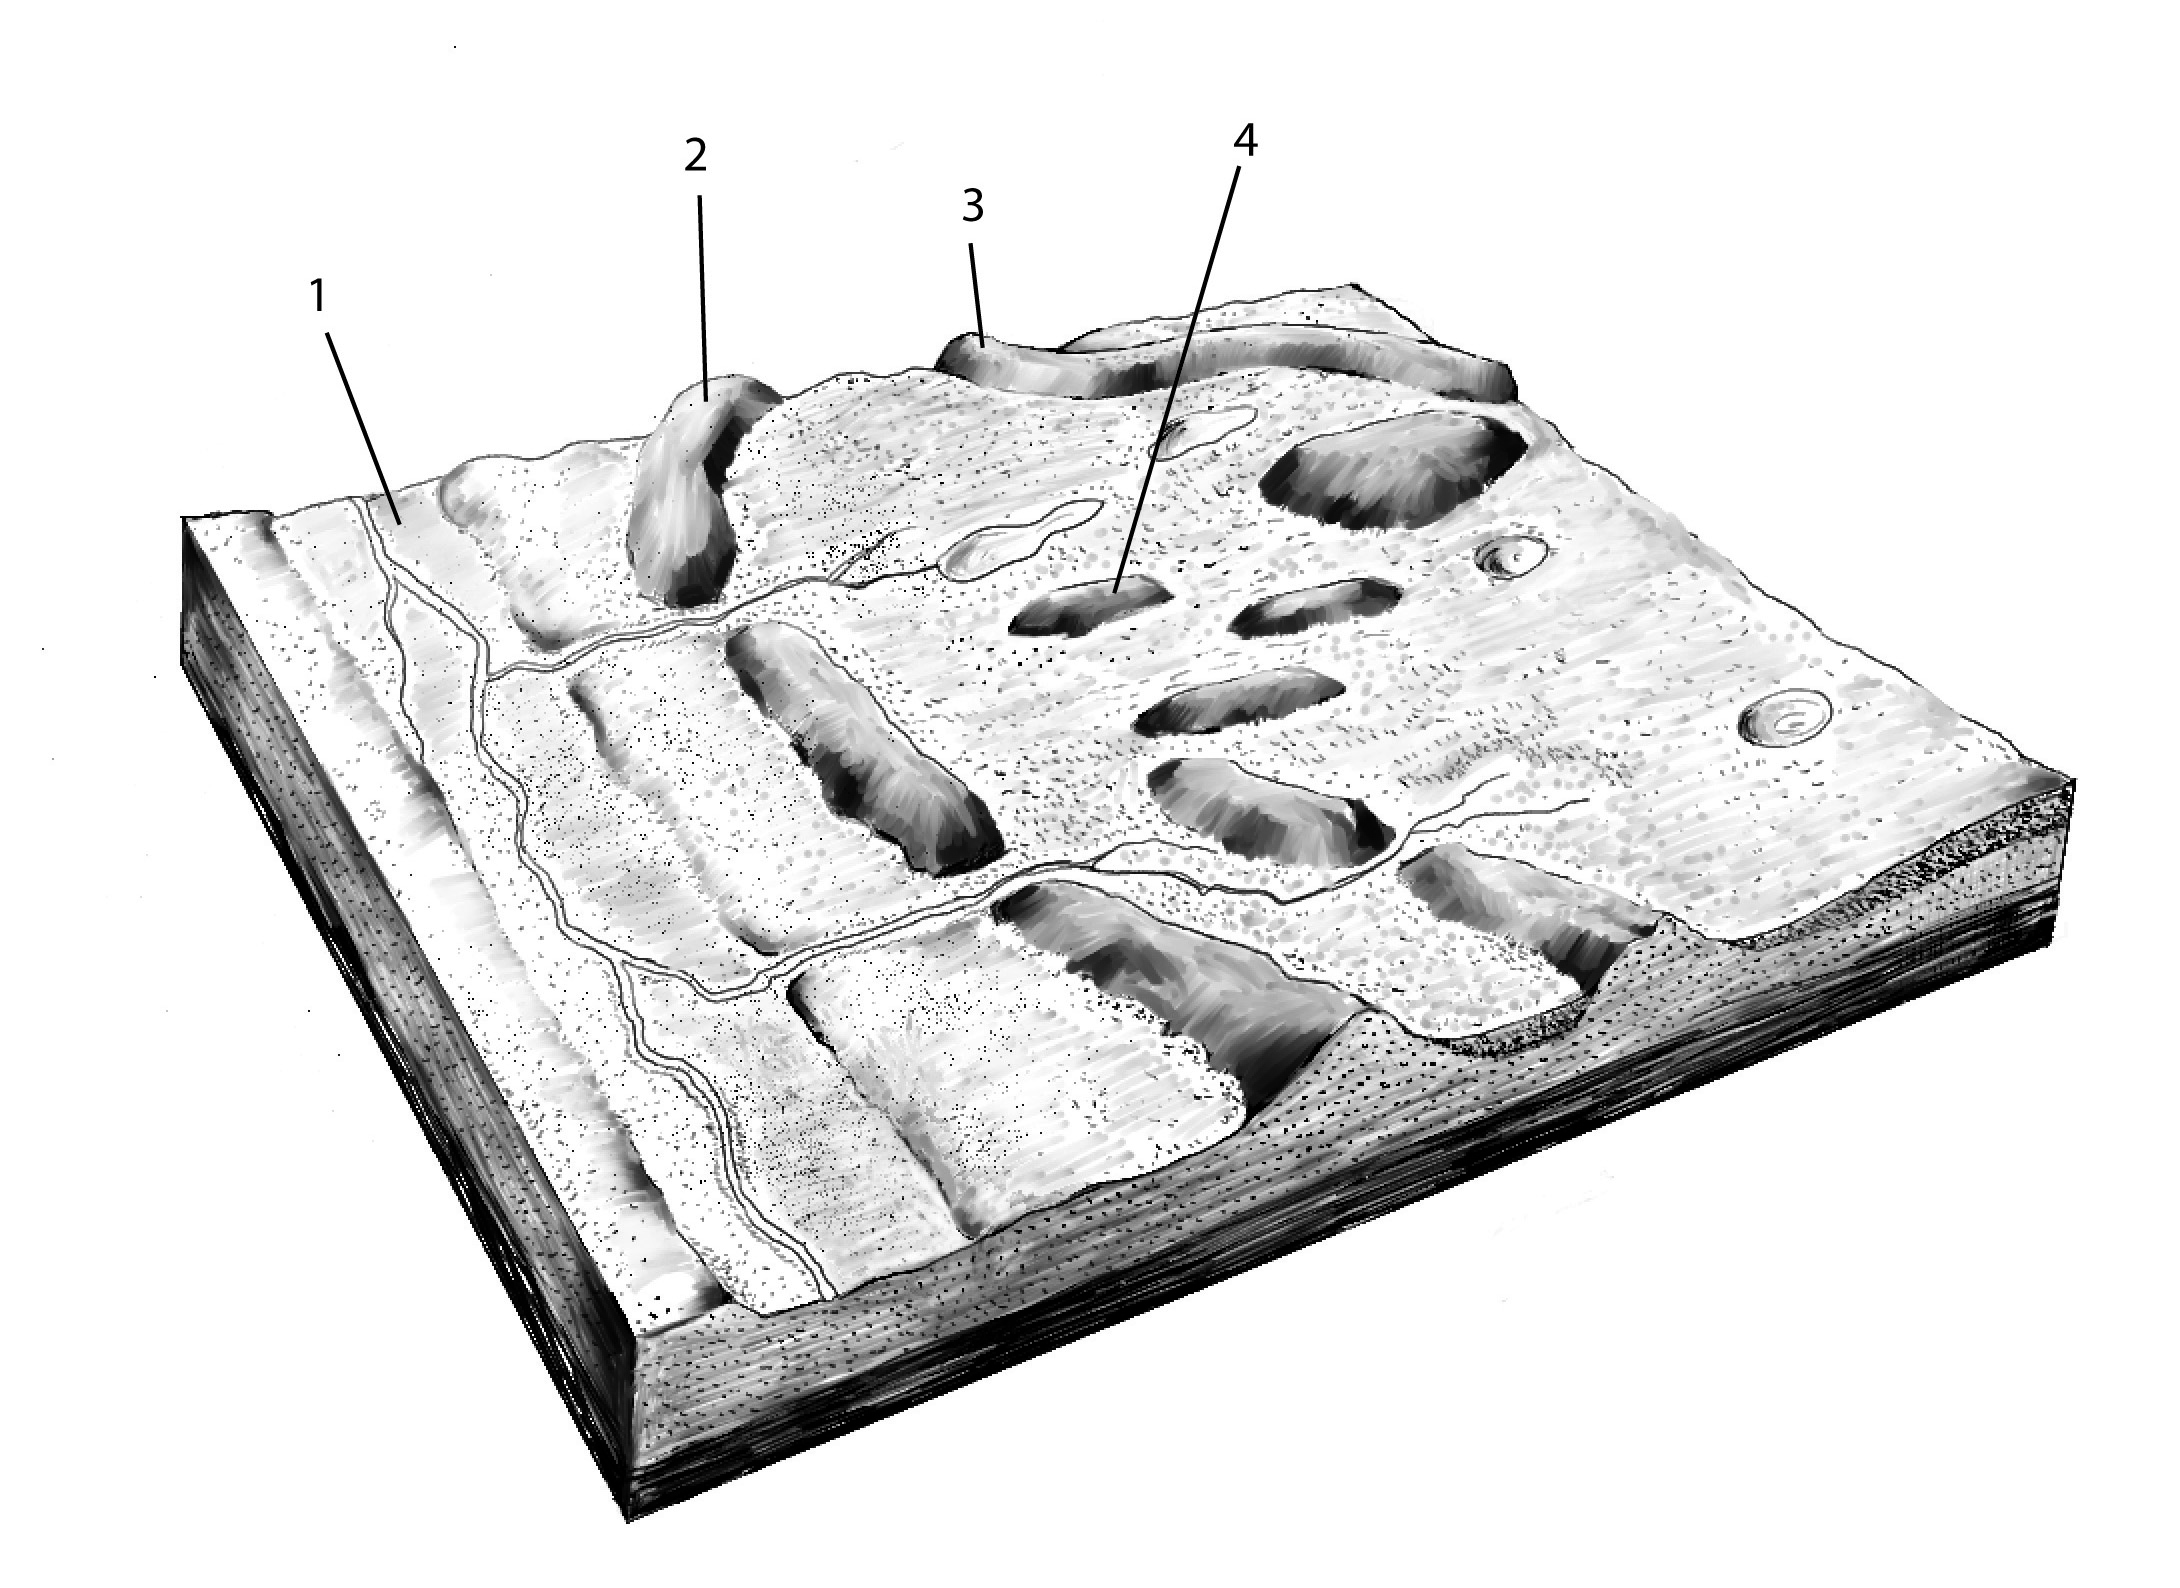 Generalized block diagram of subglacial landforms 1 = glacial spillway, 2 = terminal moraine, 3 = esker, 4 = drumlin